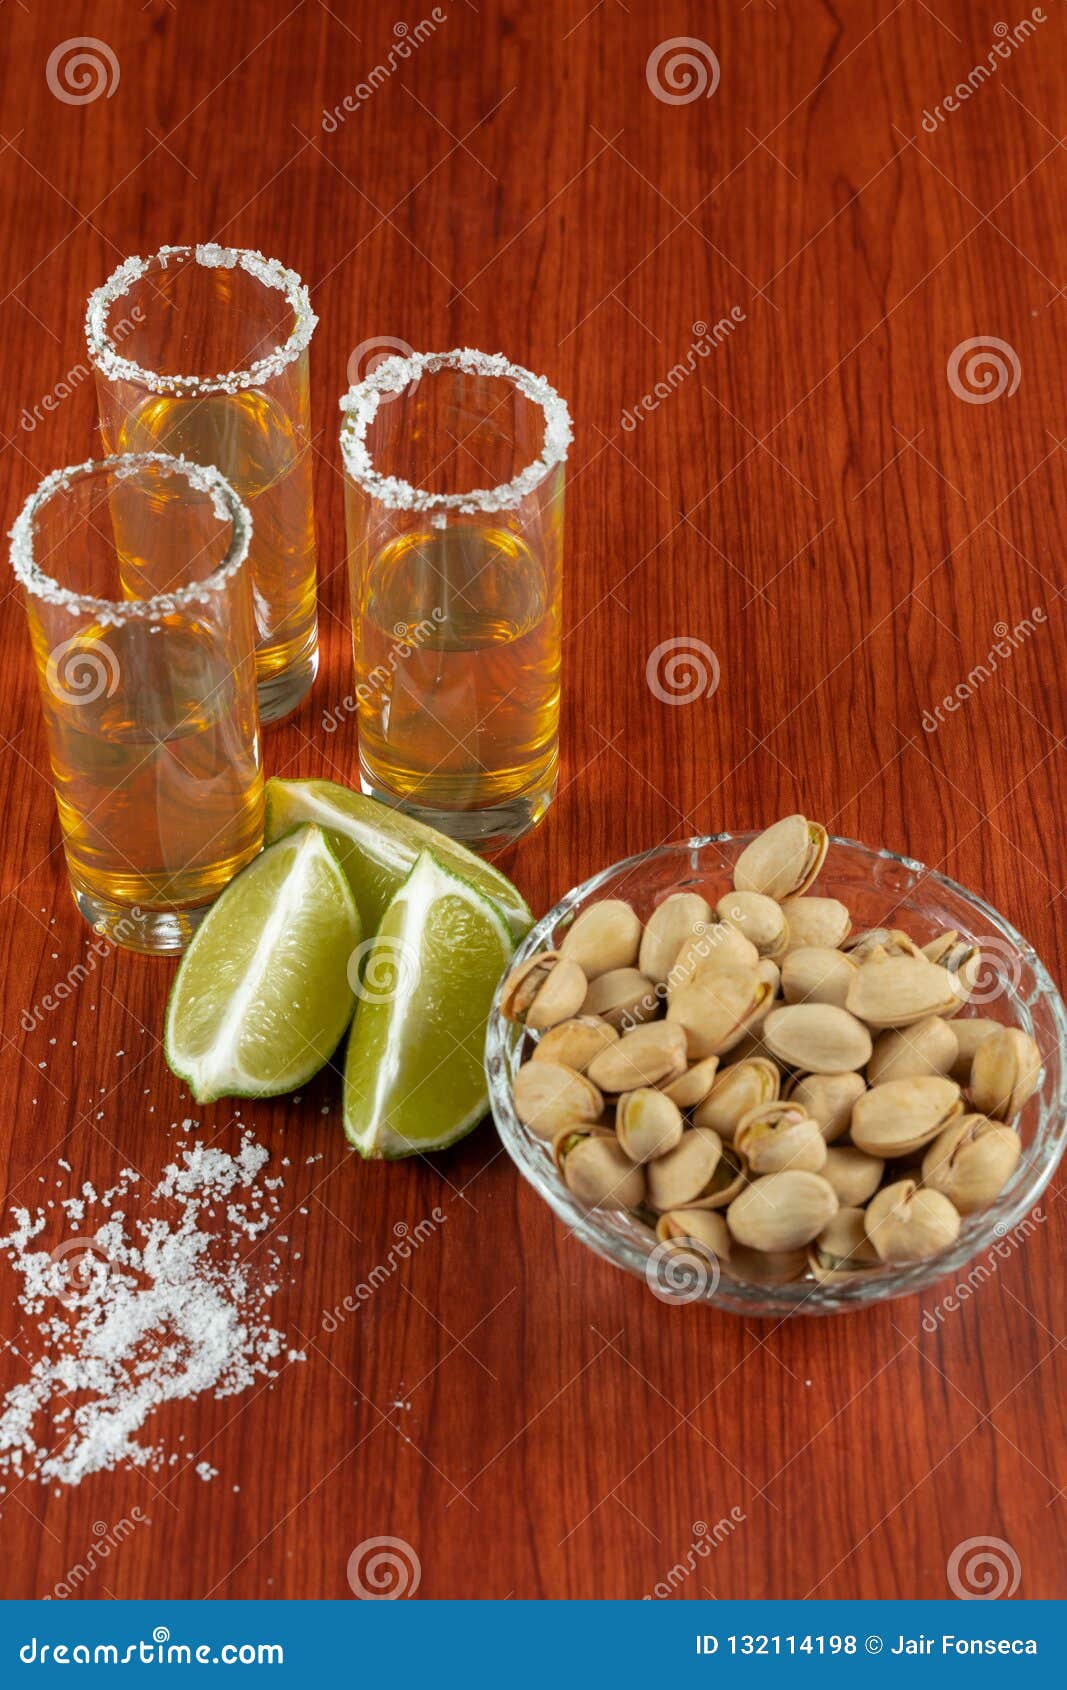 golden tequila with lemon, pistachos, cacahuate, and salt. drinks, liquor